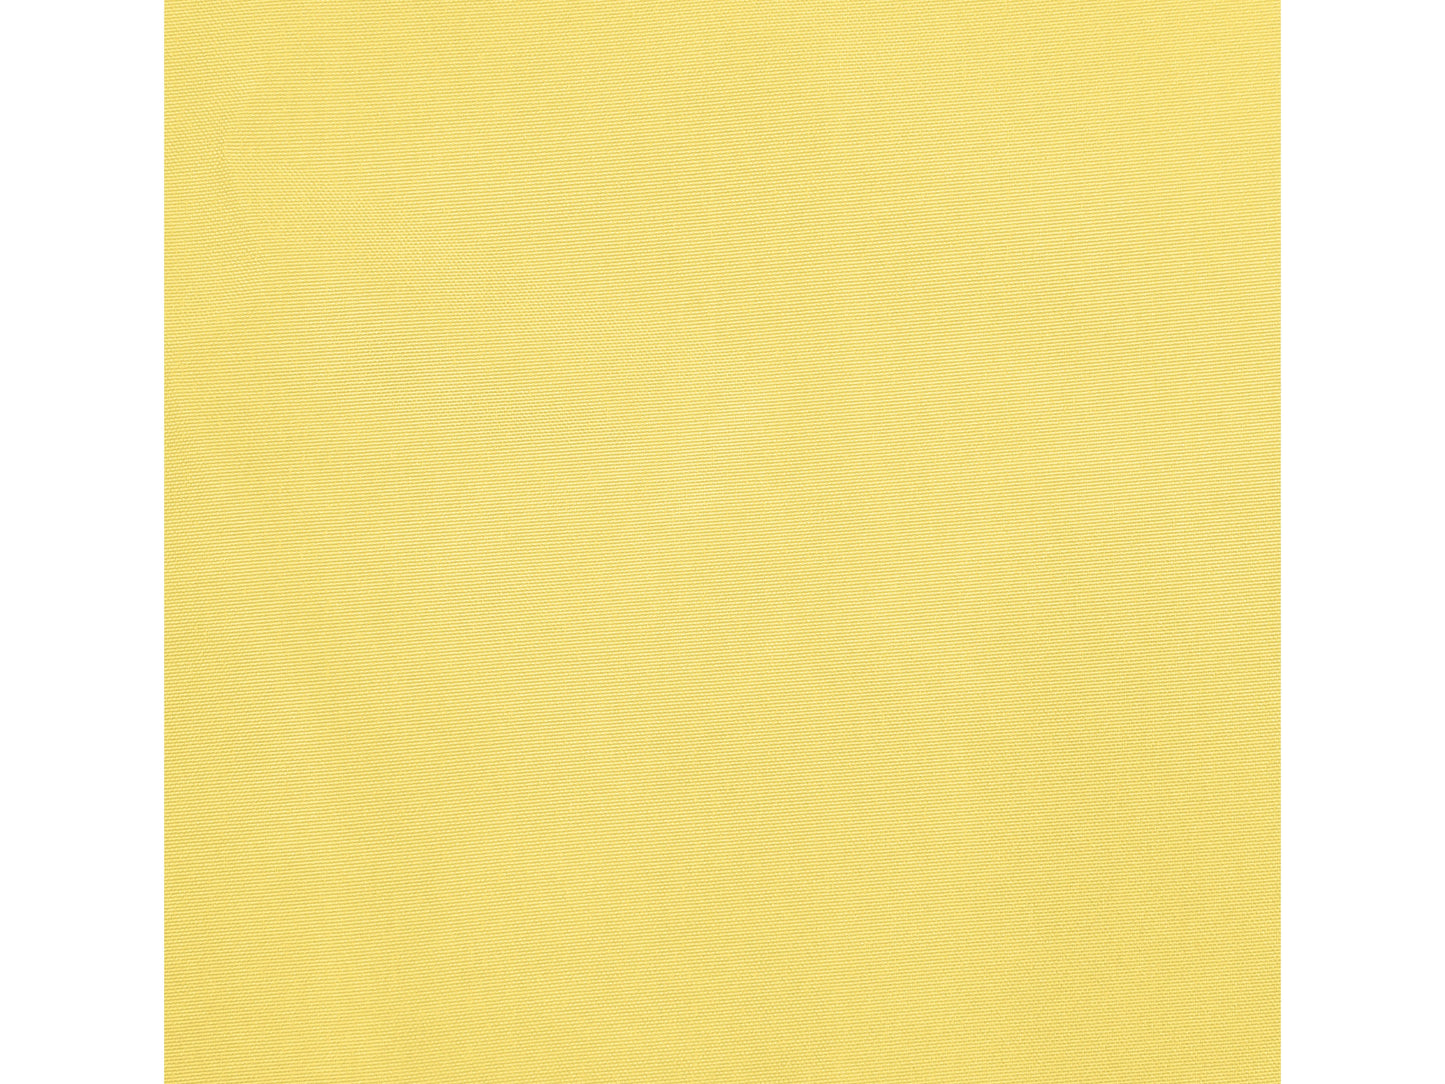 yellow square patio umbrella, tilting 300 Series detail image CorLiving#color_yellow